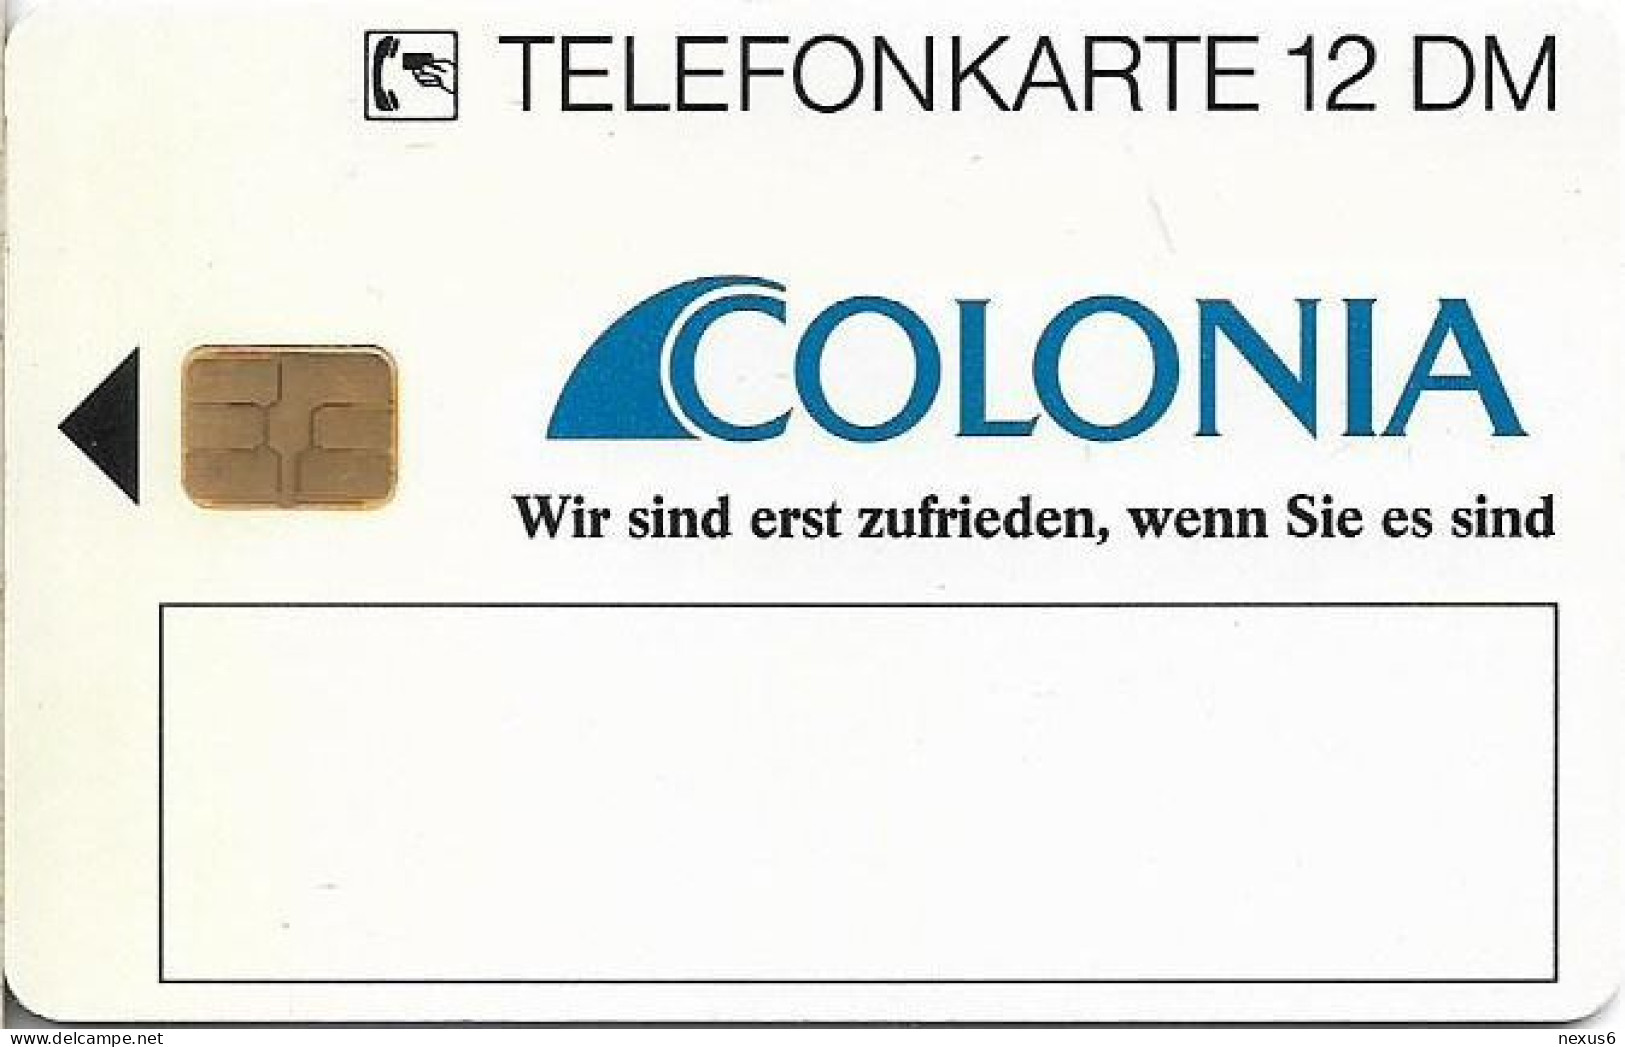 Germany - Colonia Versicherung 2 – Regen - O 0303B - 09.1993, 12DM, 3.000ex, Mint - O-Series : Séries Client